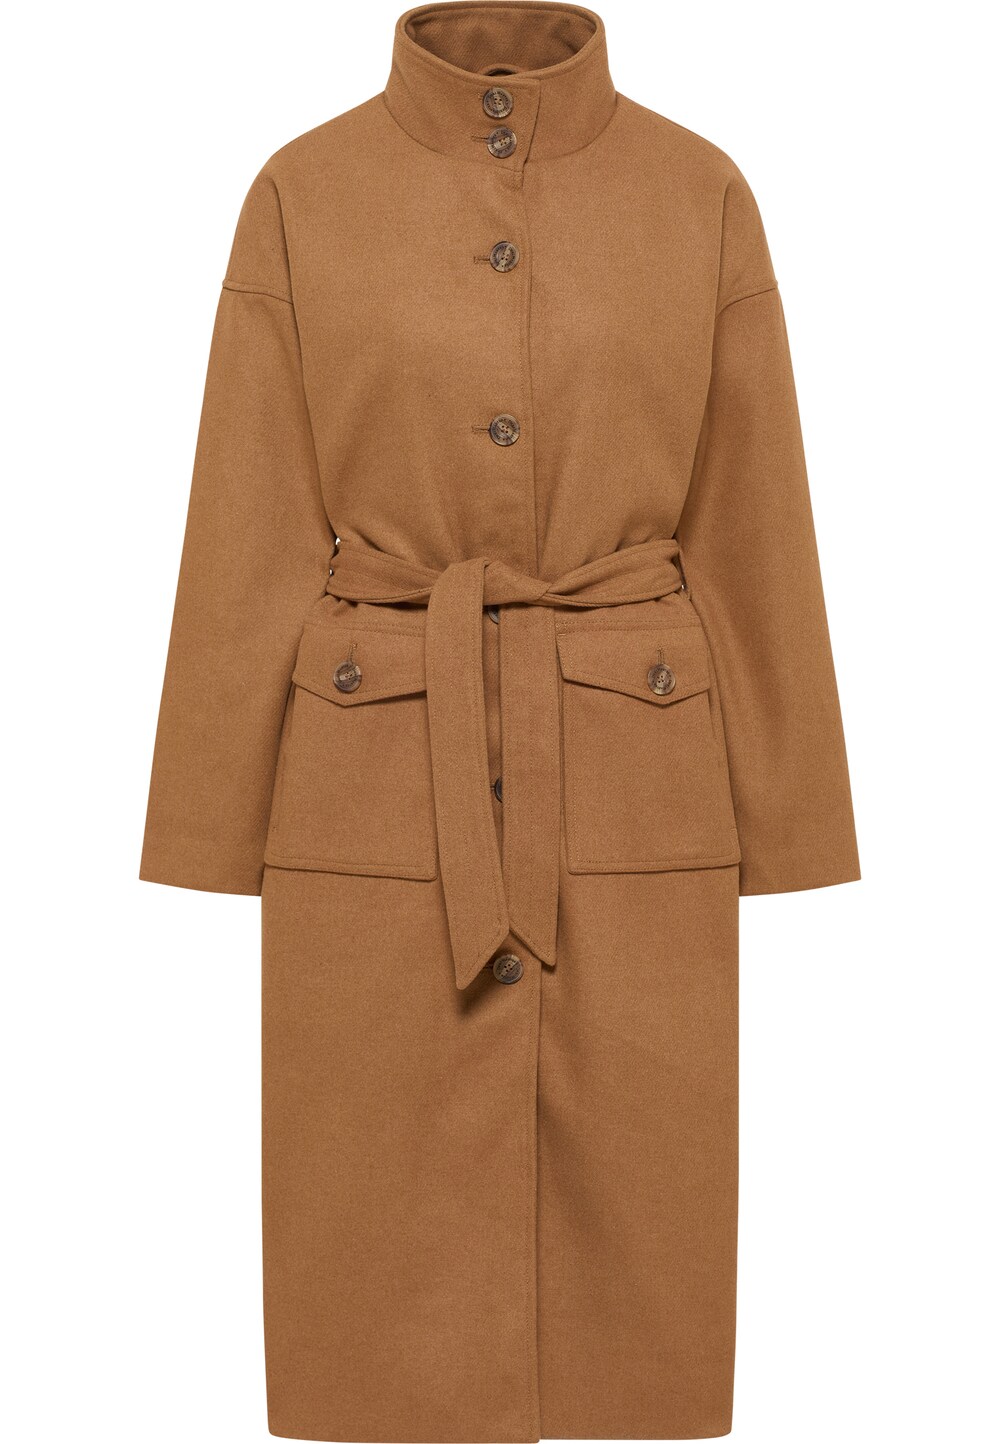 Межсезонное пальто DreiMaster, коричневый межсезонное пальто dreimaster коричневый